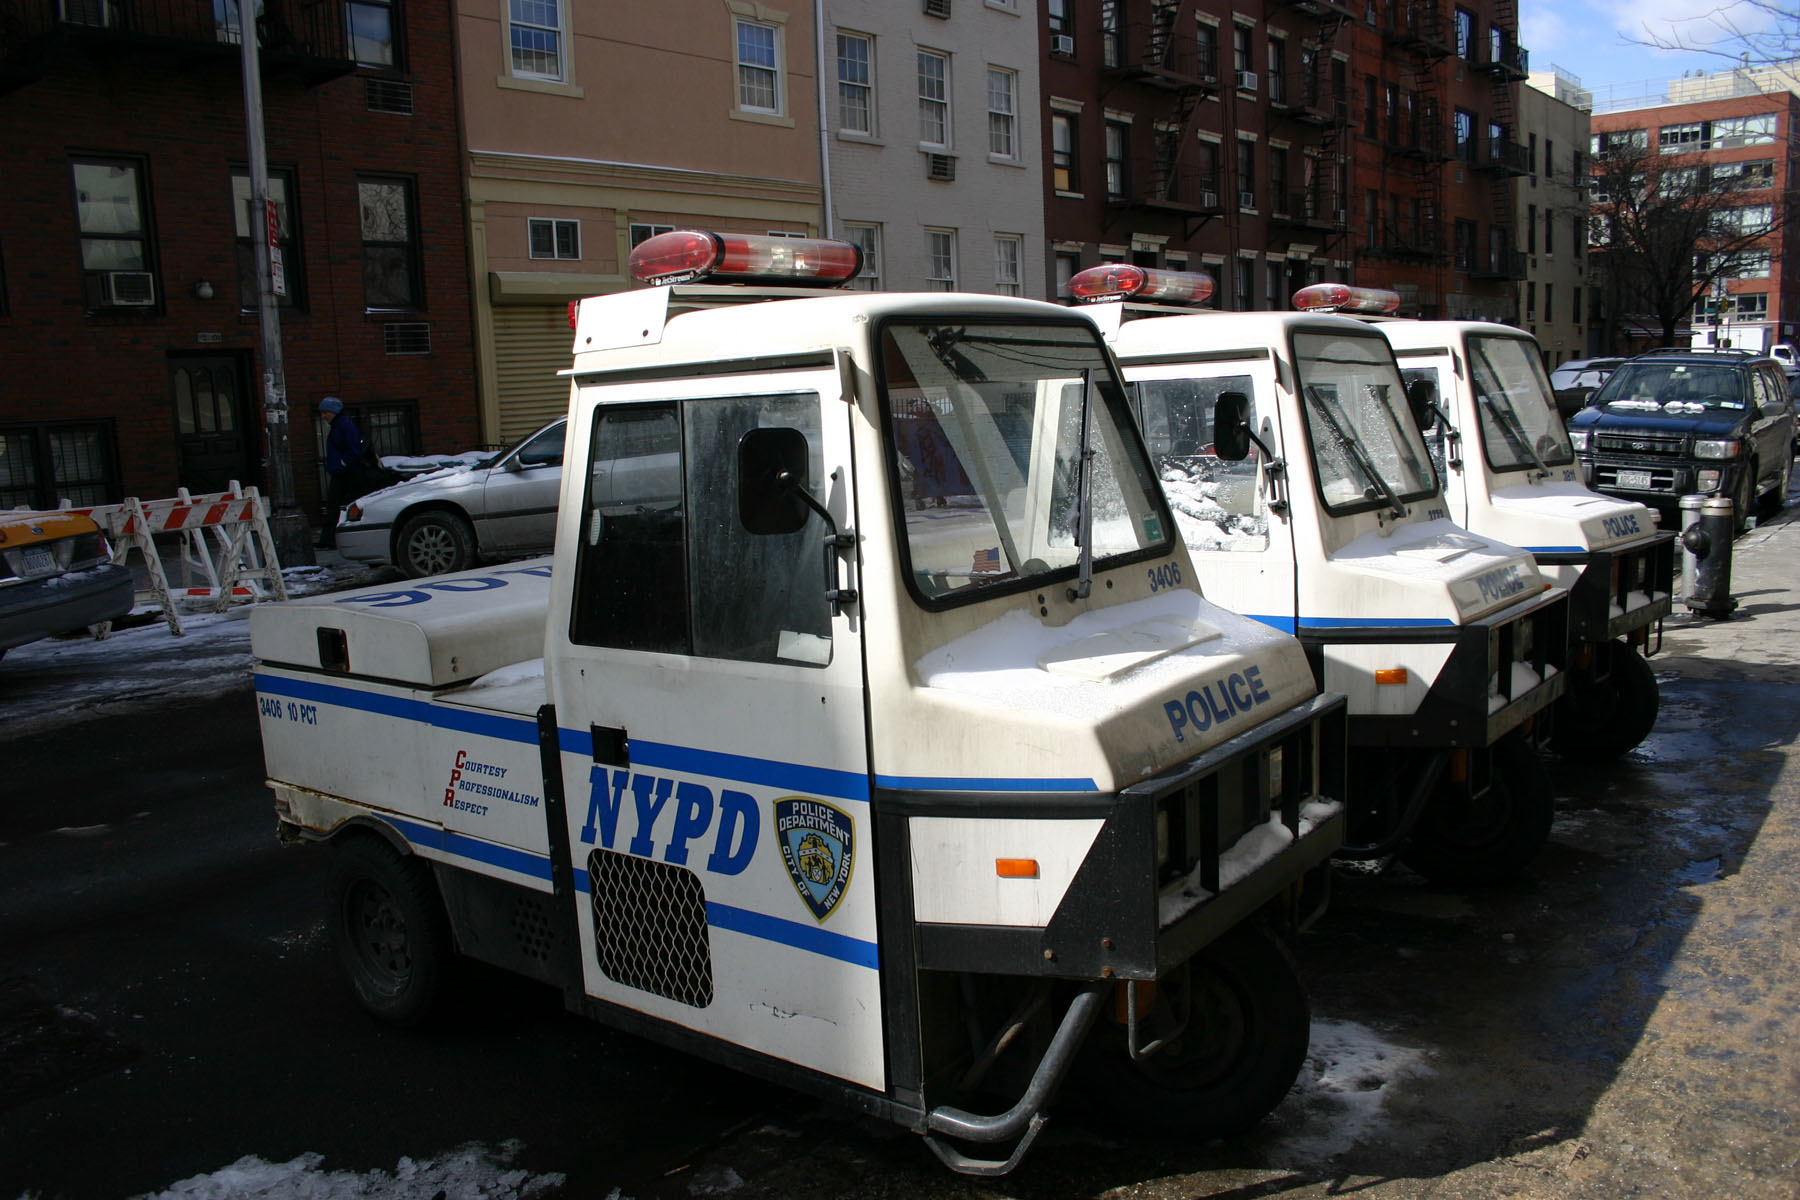 Nypd patrol vehicle photo